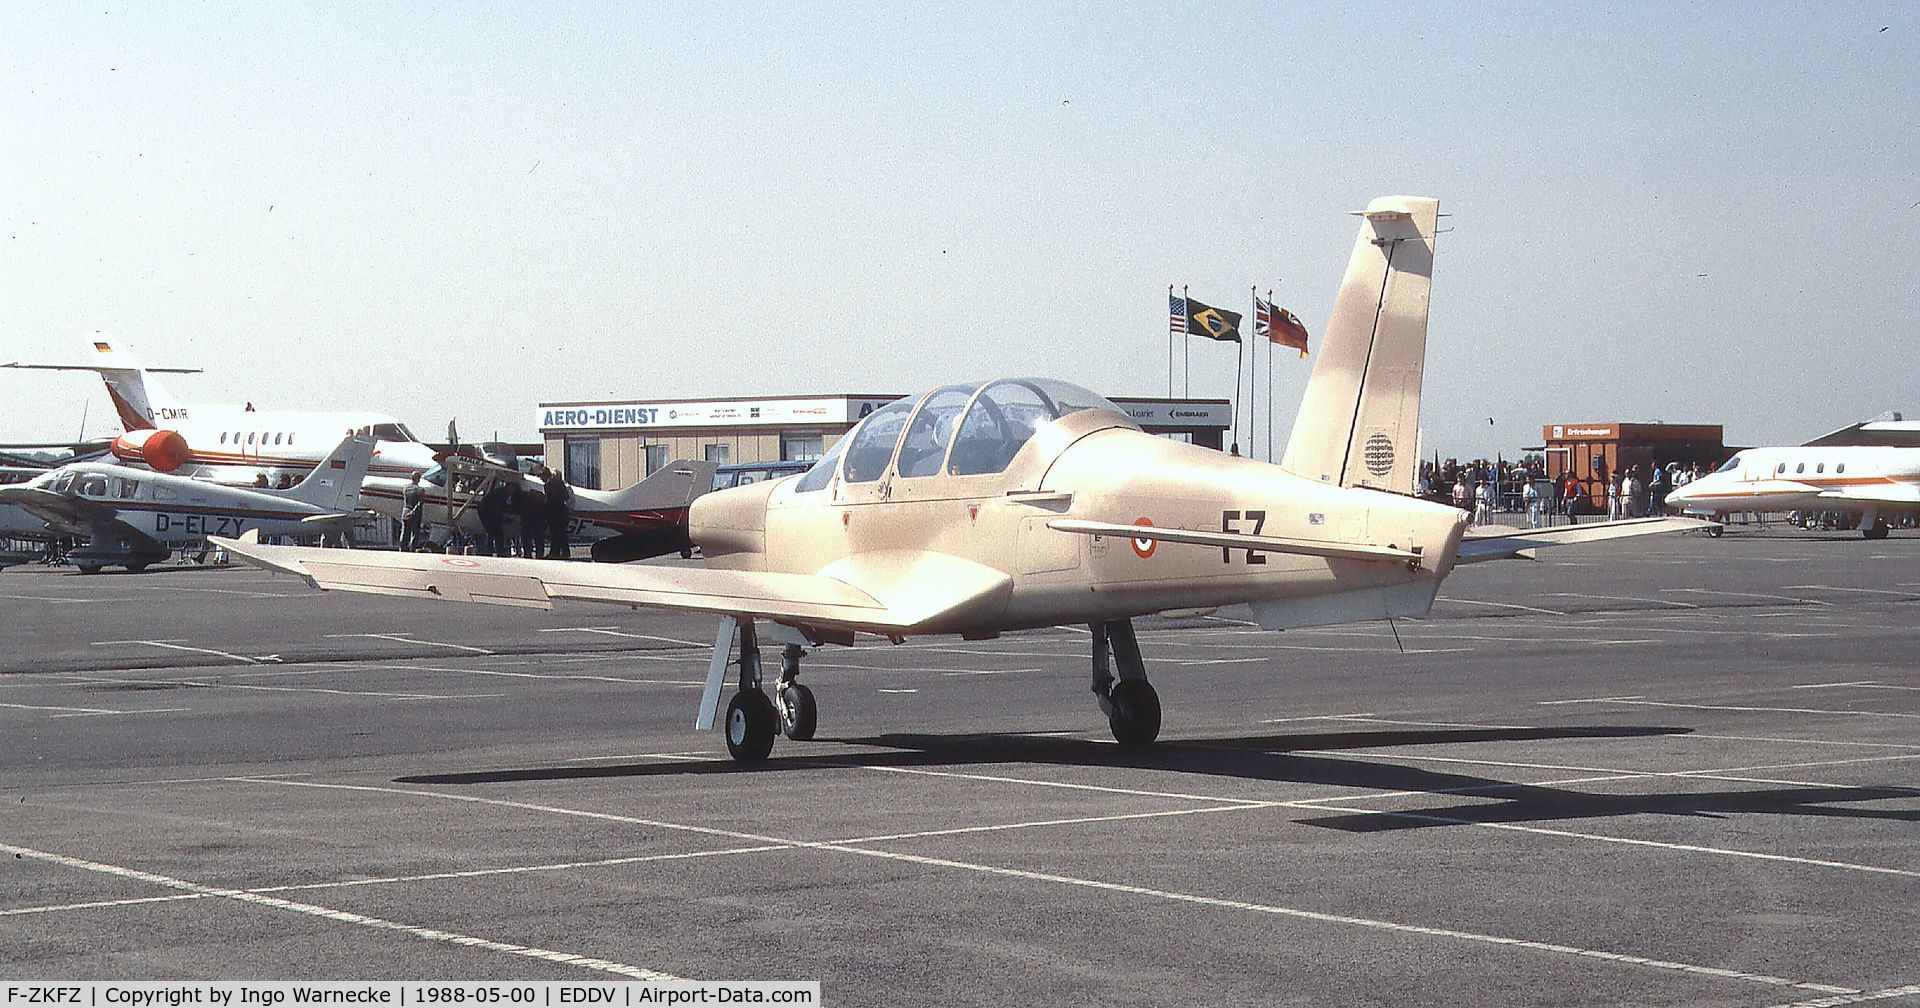 F-ZKFZ, Socata TB-30 C/N 03, SOCATA TB-30 Epsilon Co. demonstrator with pseudo AF markings (FZ) at the ILA 1988, Hannover